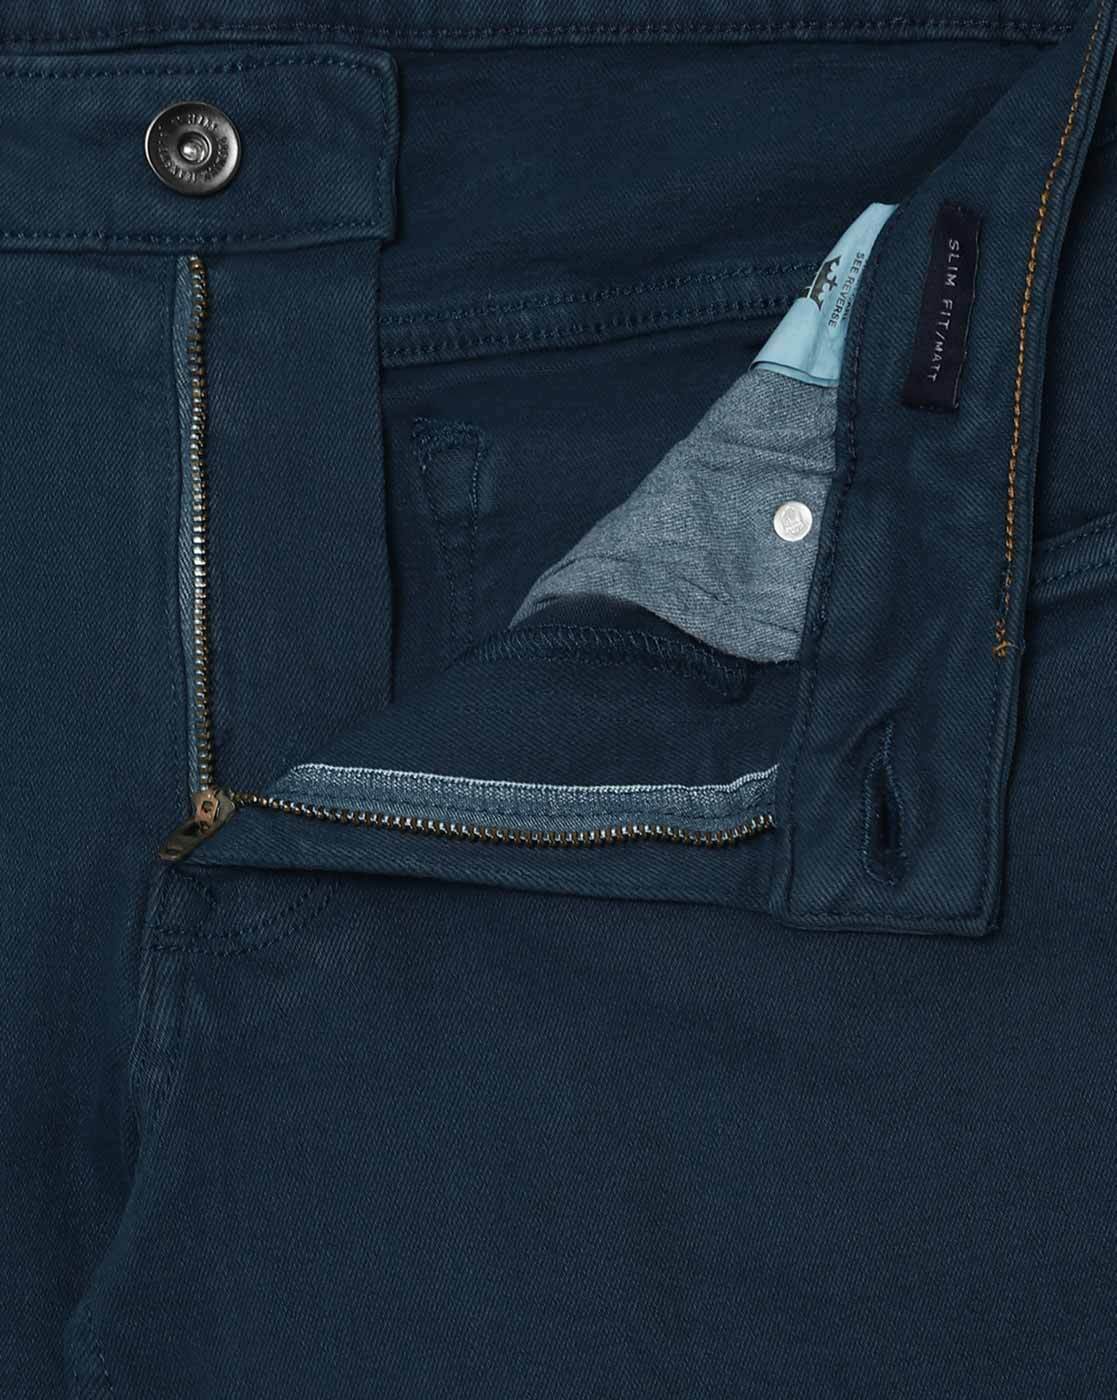 Buy Louis Philippe Jeans Men Blue Matt Fit Stretchable Jeans on